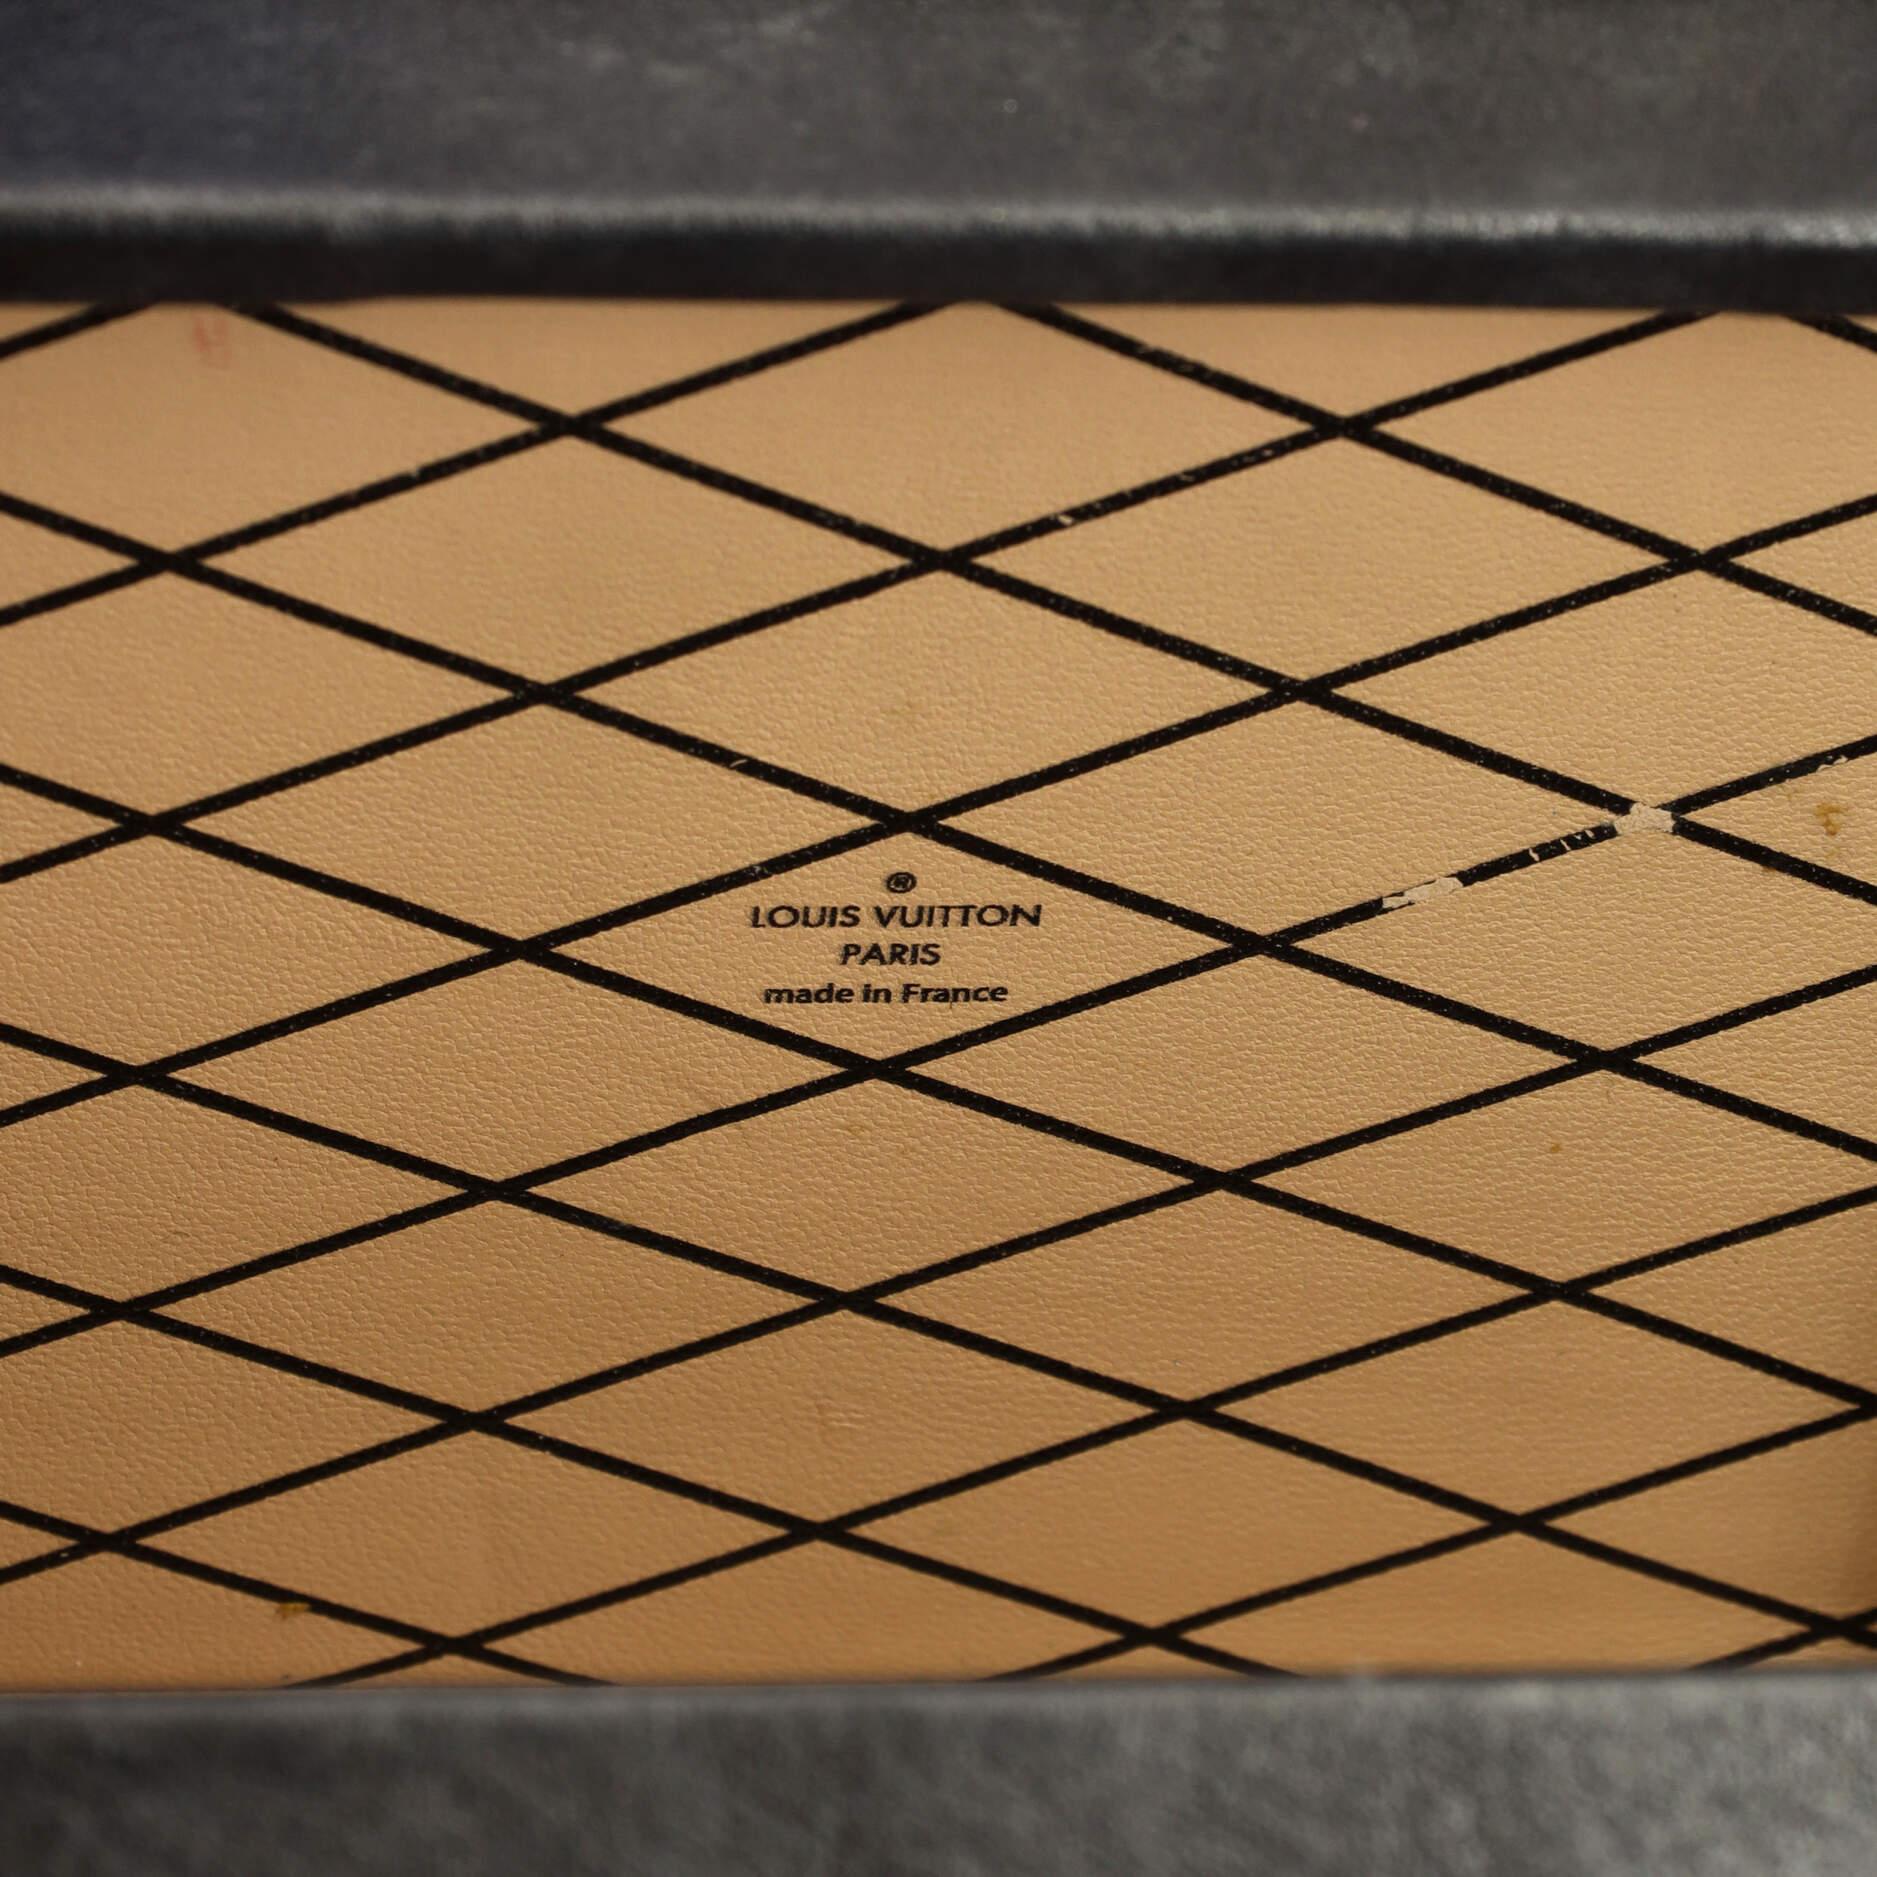 Louis Vuitton Petite Malle Handbag Limited Edition Tribal Print Leather For Sale 7